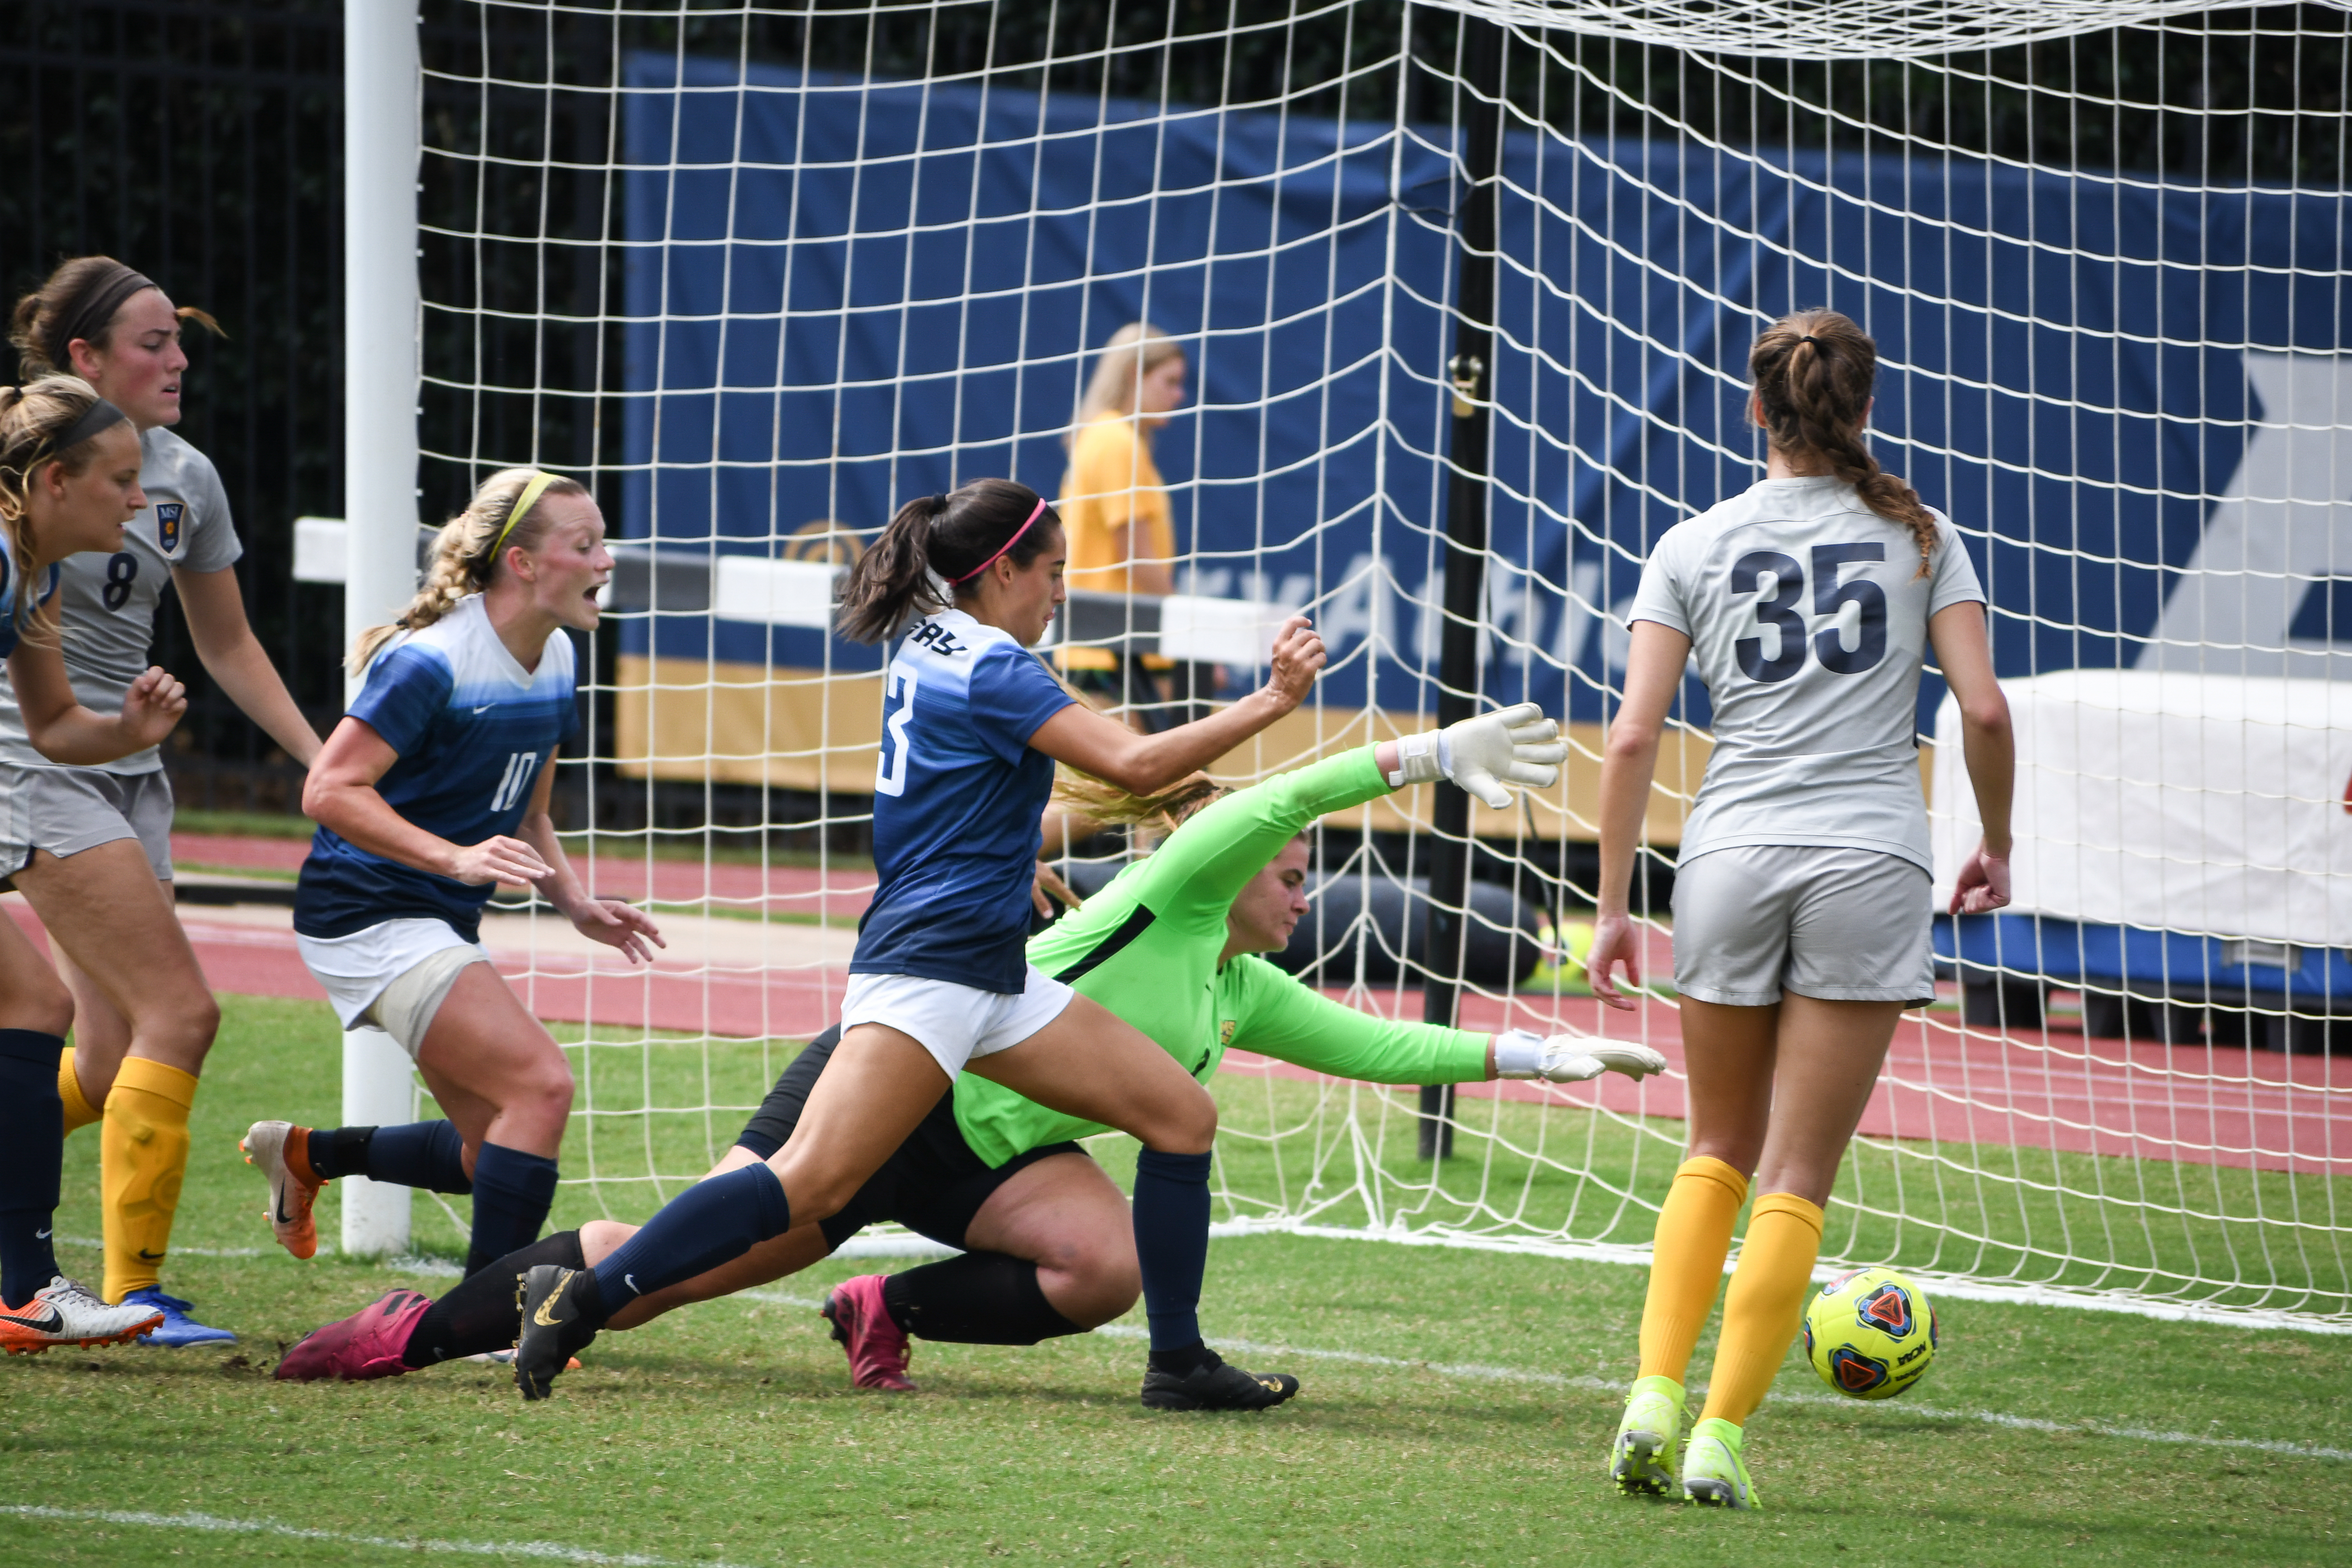 Emory women’s soccer wins big against regional foes, extending streak to three